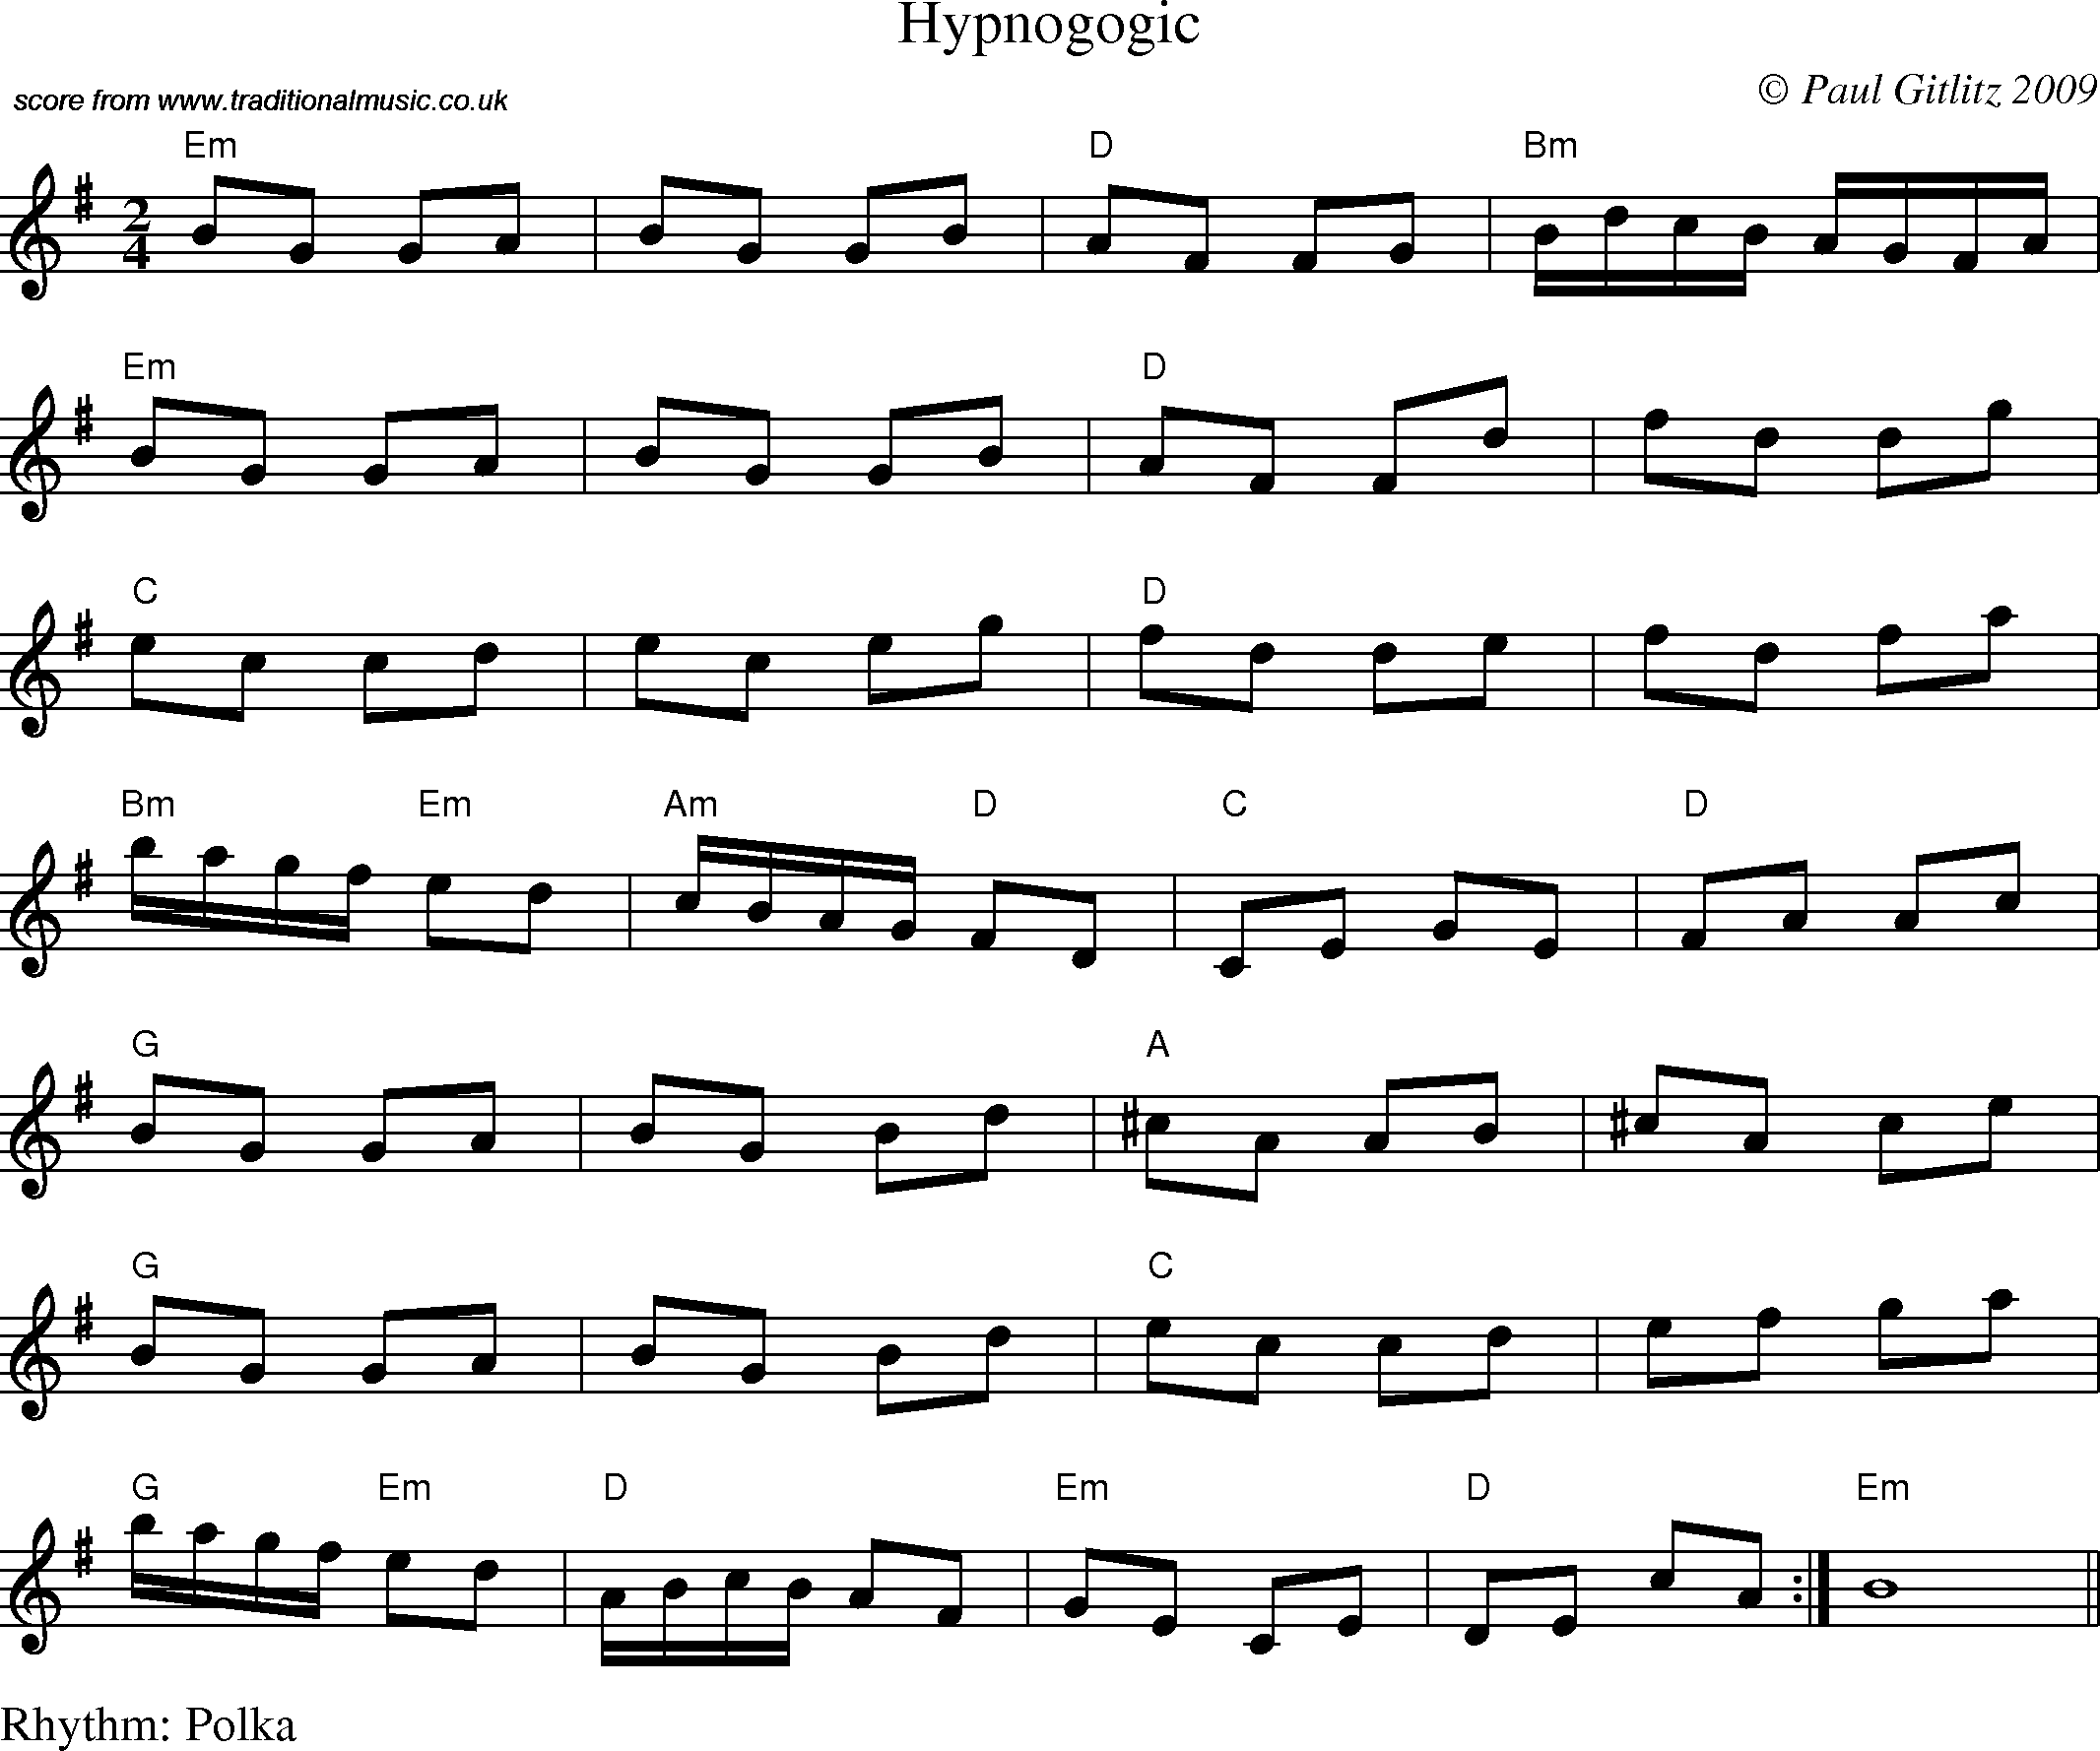 Sheet Music Score for Polka - Hypnogogic